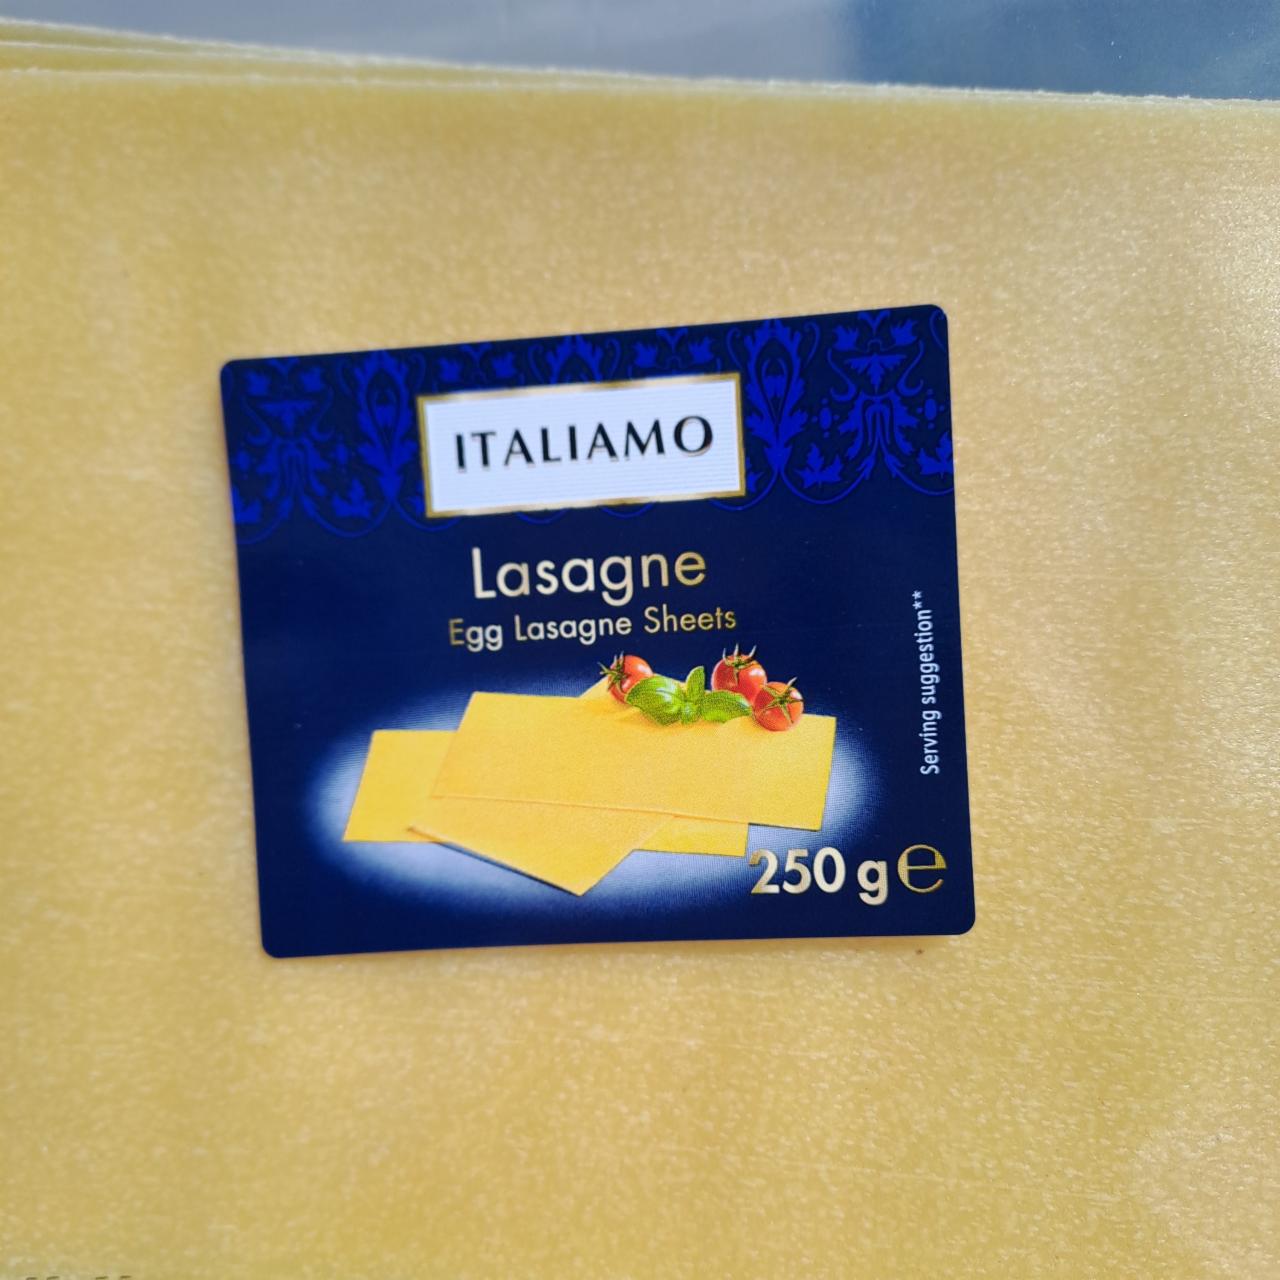 Fotografie - Lasagne egg lasagne sheets Italiamo